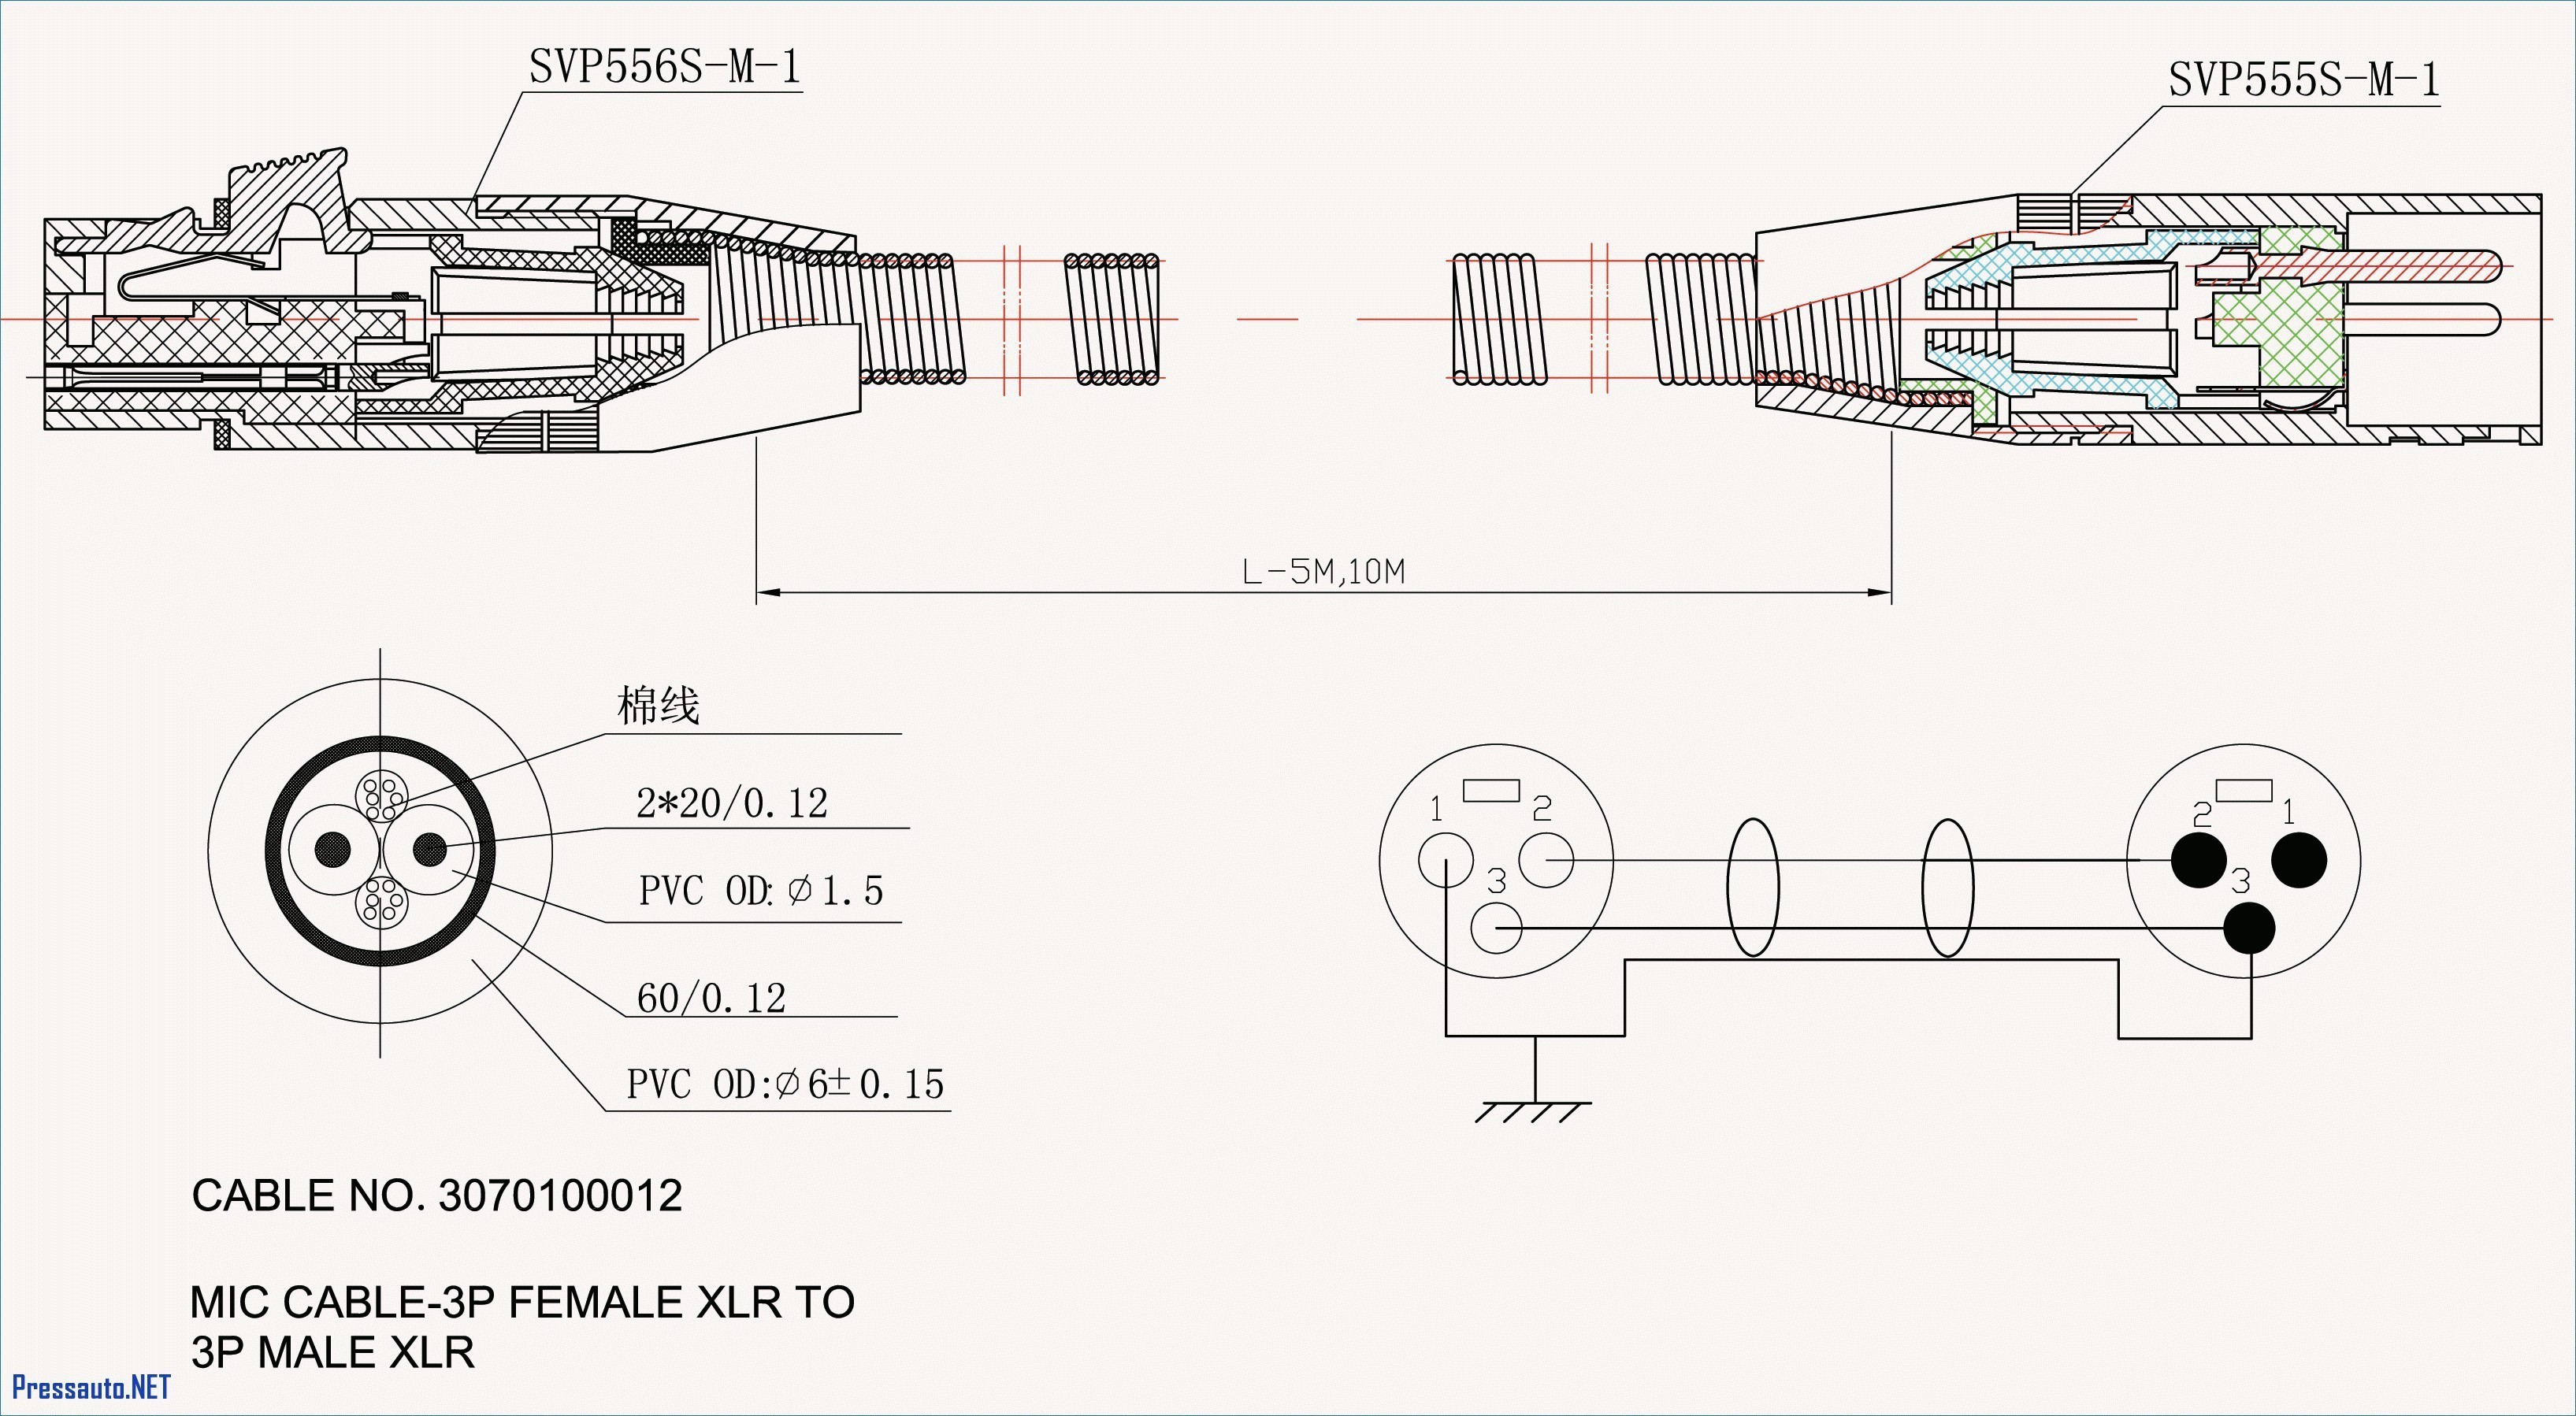 How An Engine Works Diagram Rx 350 Amplifier Wiring Diagram Refrence Hatz Diesel Engine Wiring Of How An Engine Works Diagram